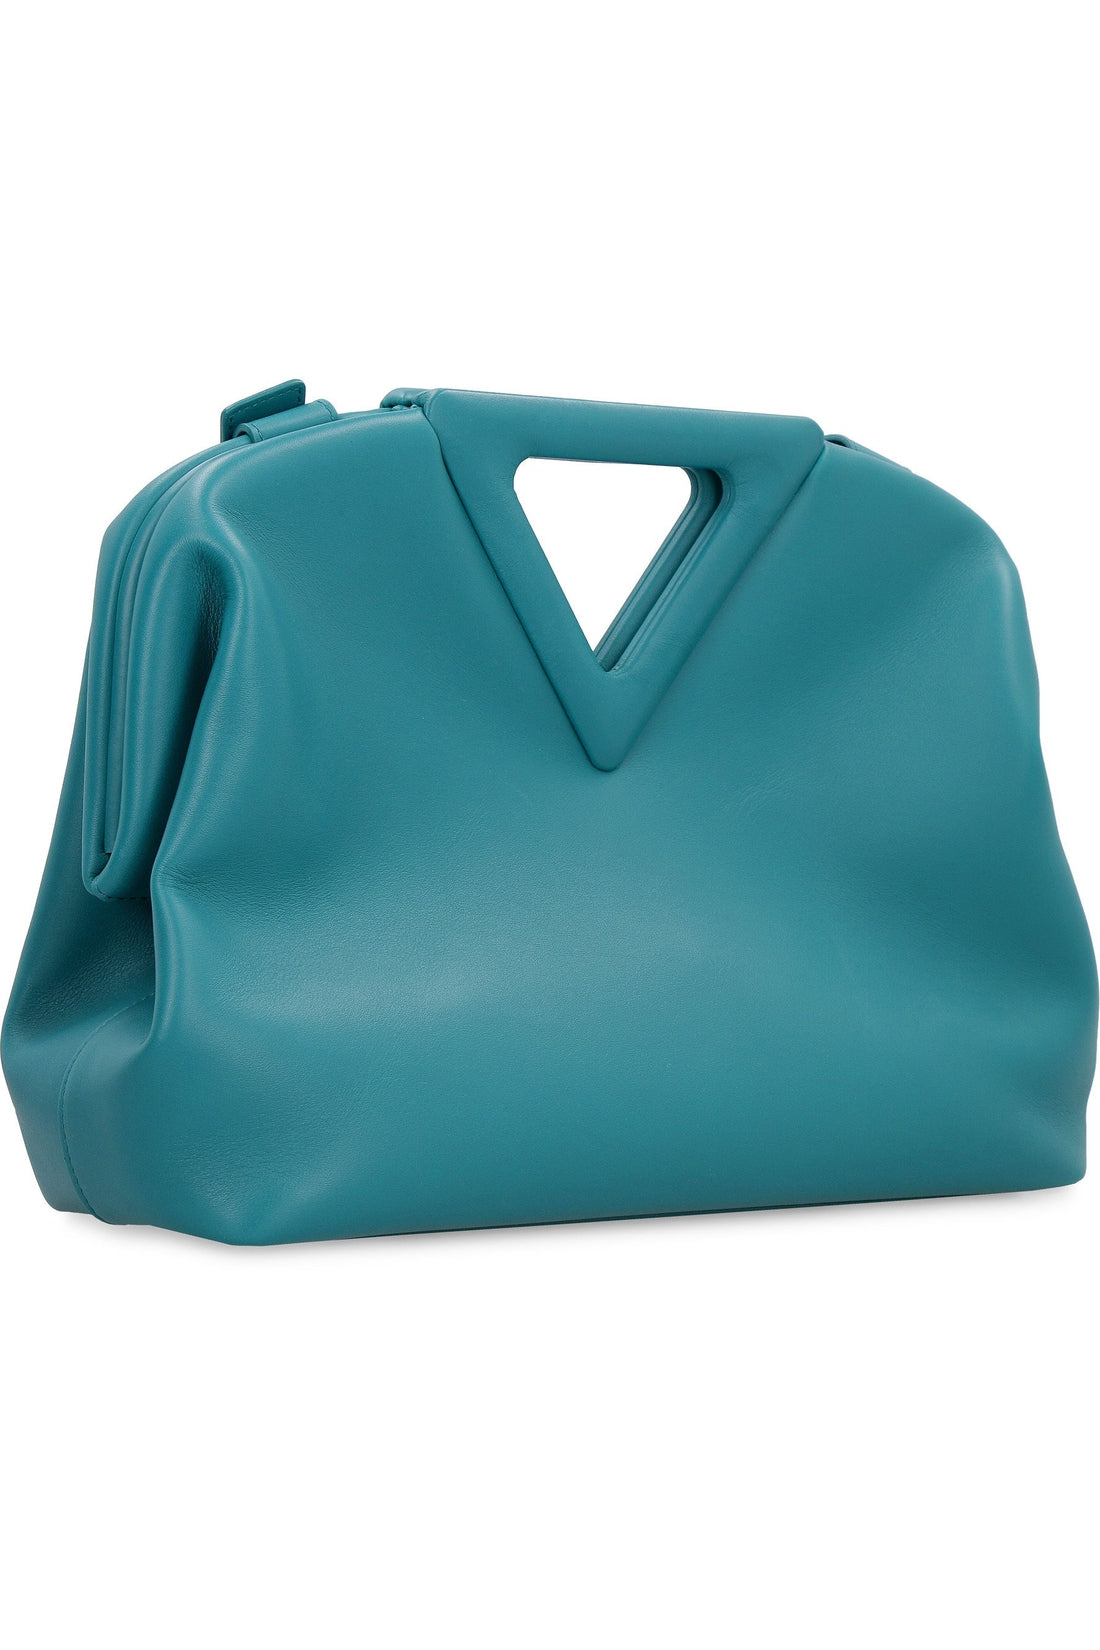 Bottega Veneta-OUTLET-SALE-Point leather bag-ARCHIVIST